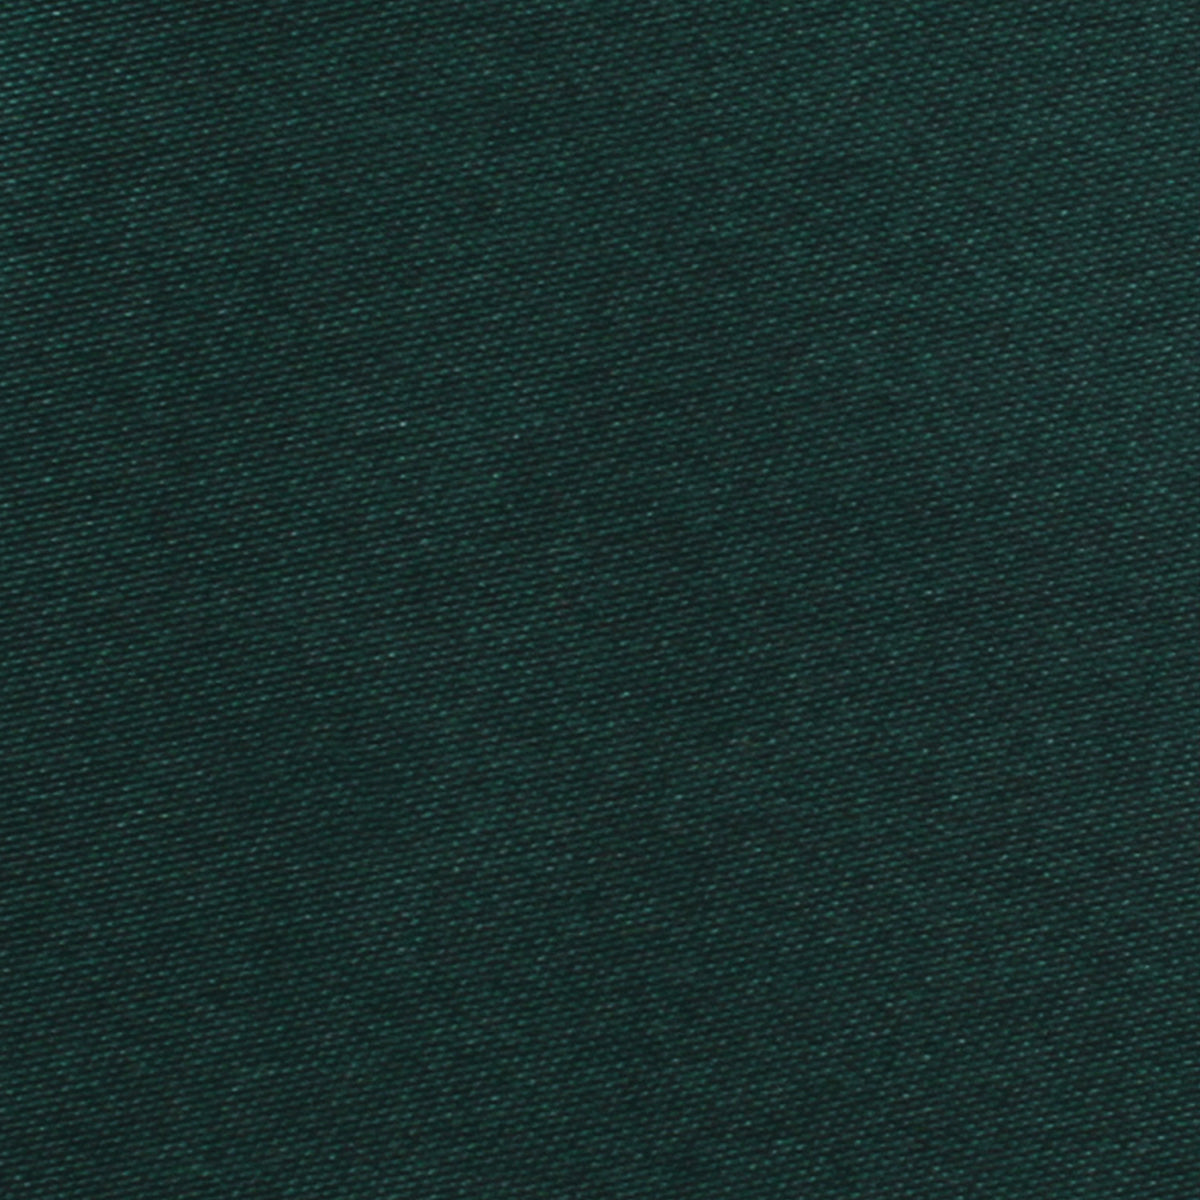 Dark Green Satin Pocket Square Fabric